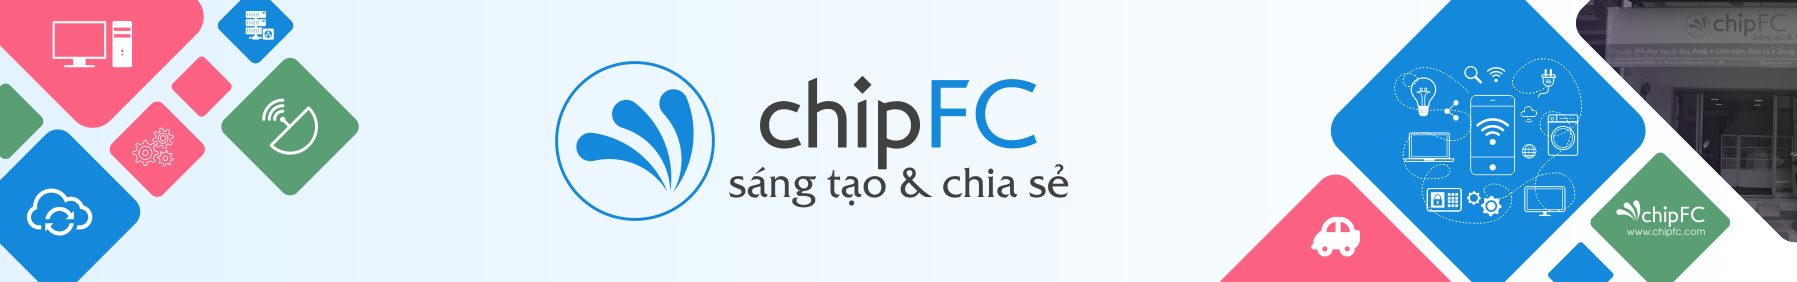 Wiki chipfc banner 2.png